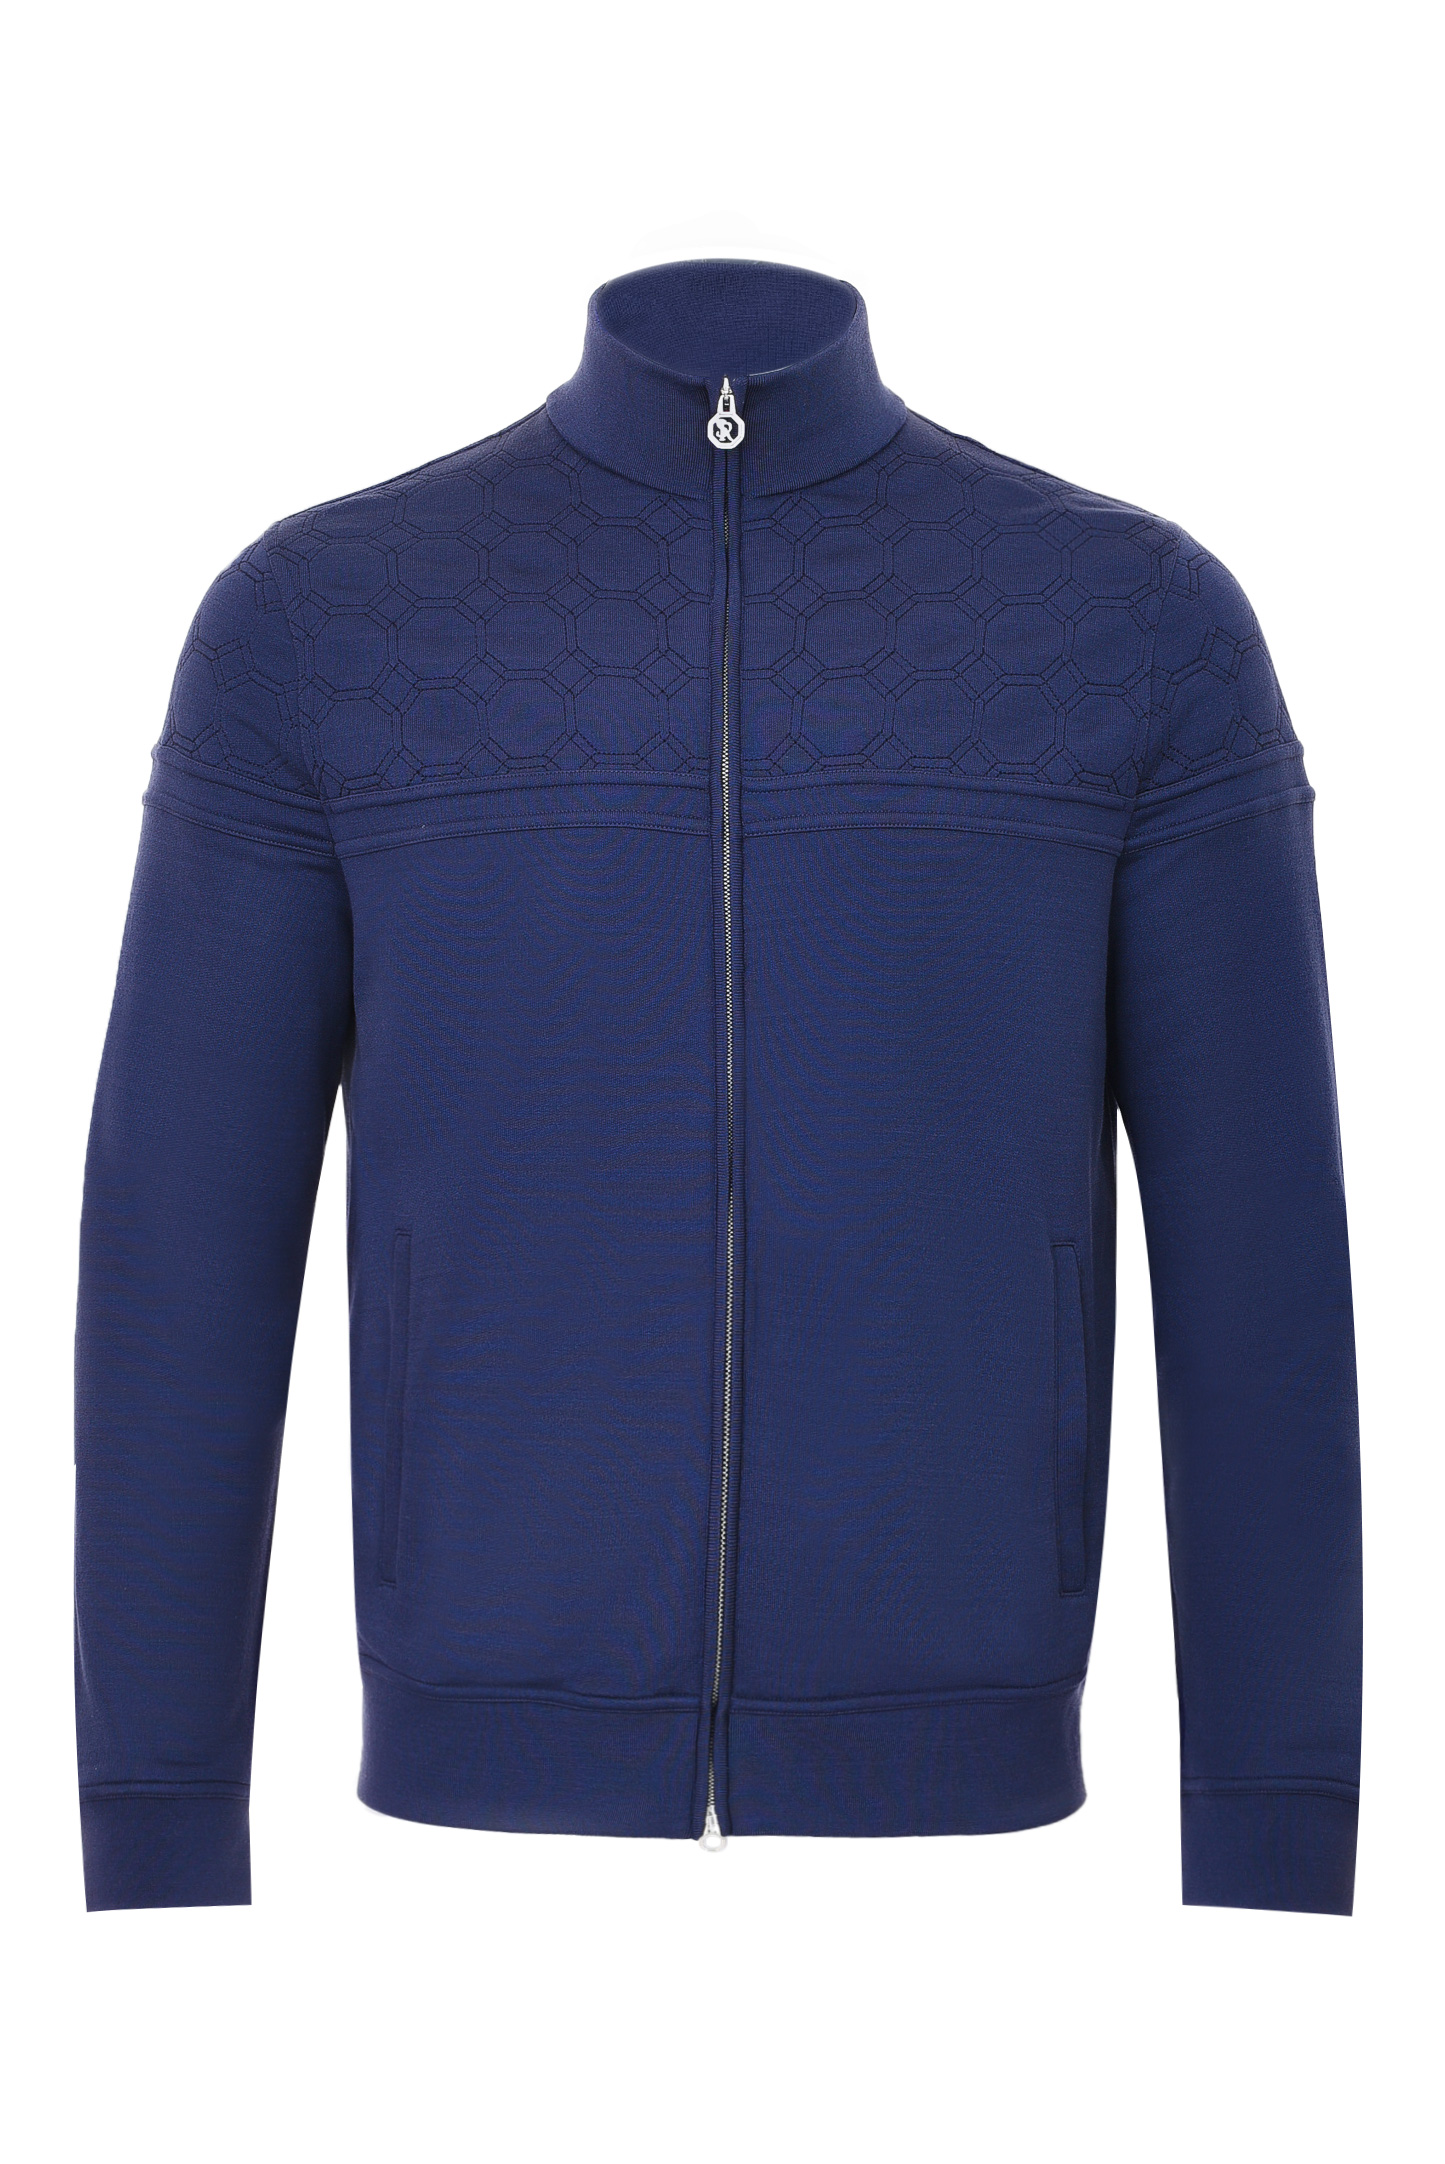 Куртка спорт STEFANO RICCI K909018R31 T21401, цвет: Синий, Мужской